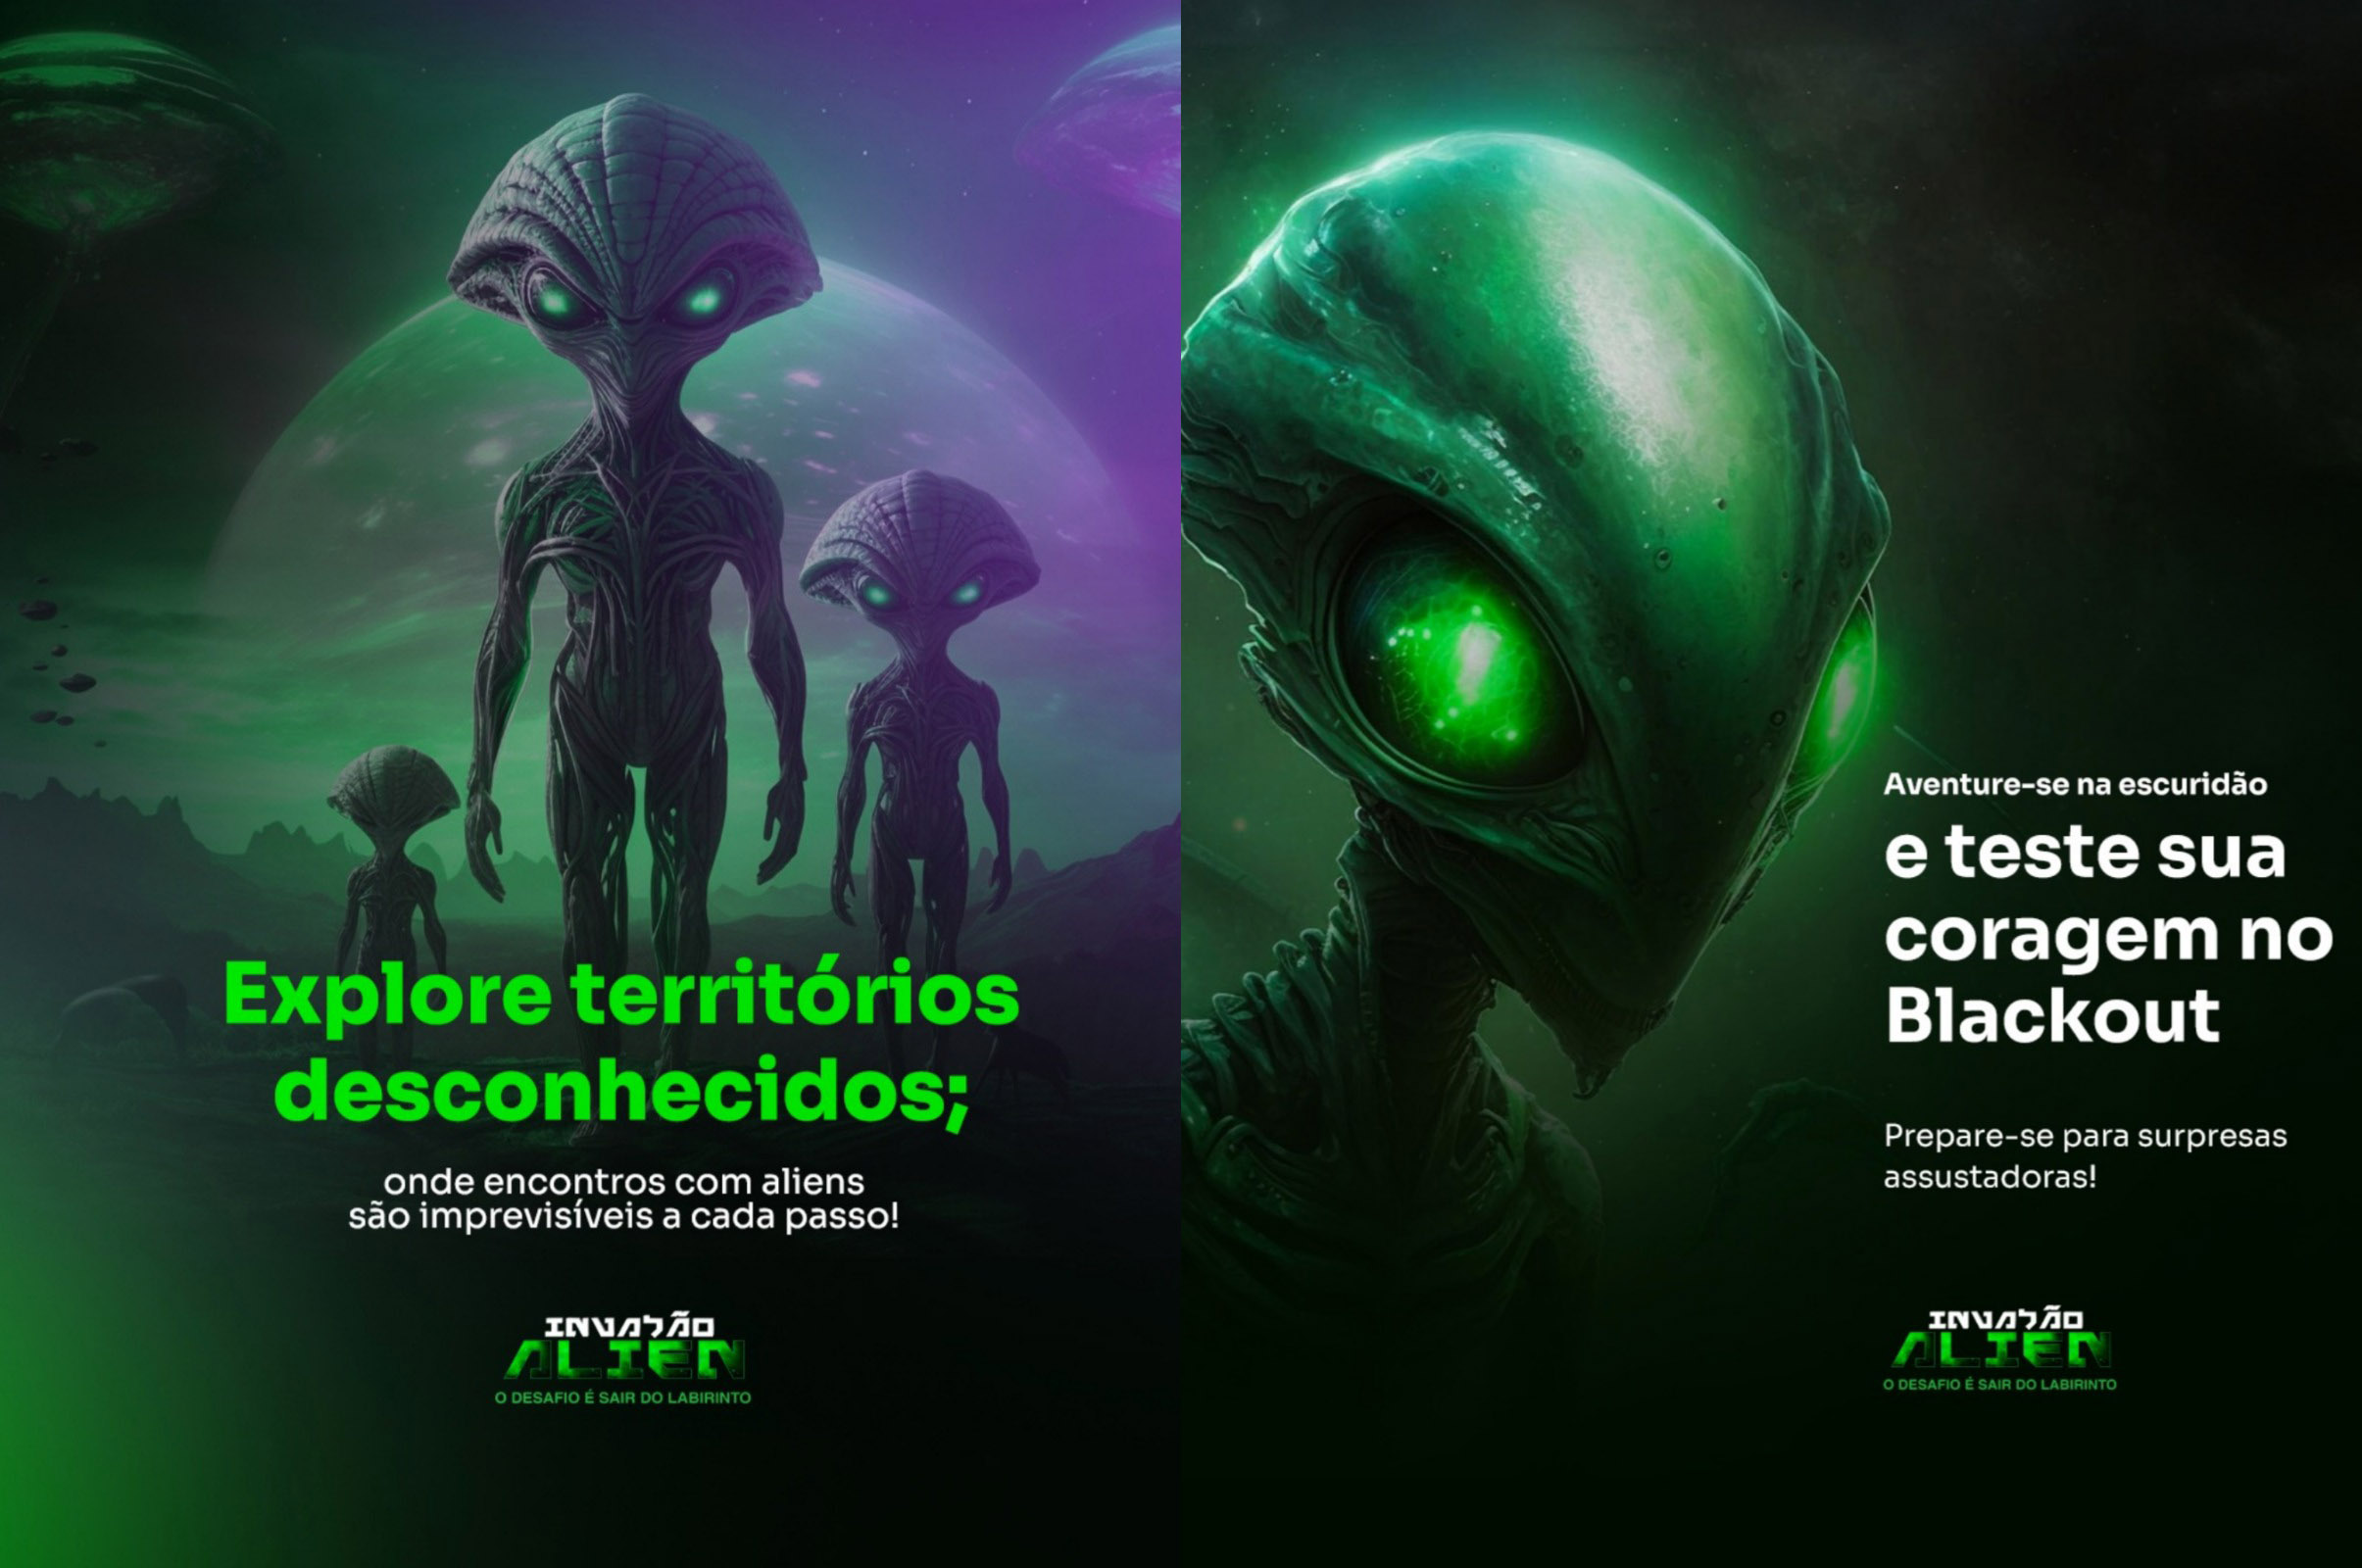 Invasão Alien chega ao Boulevard Shopping Brasília - STG News